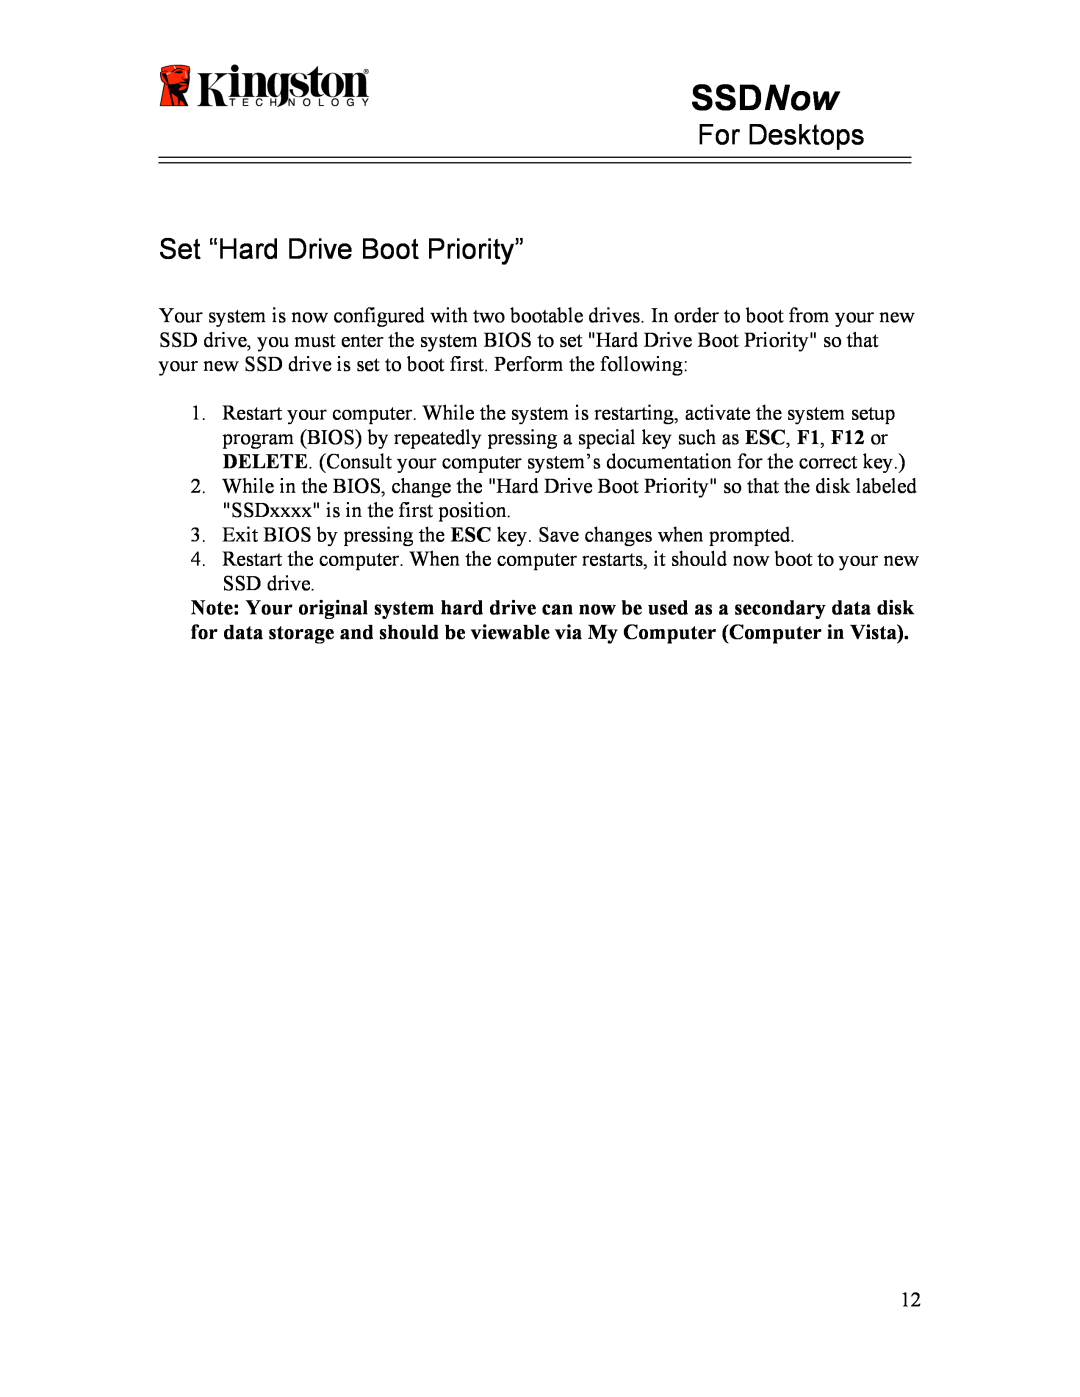 Kingston Technology 07-16-2009 manual For Desktops Set “Hard Drive Boot Priority”, SSDNow 